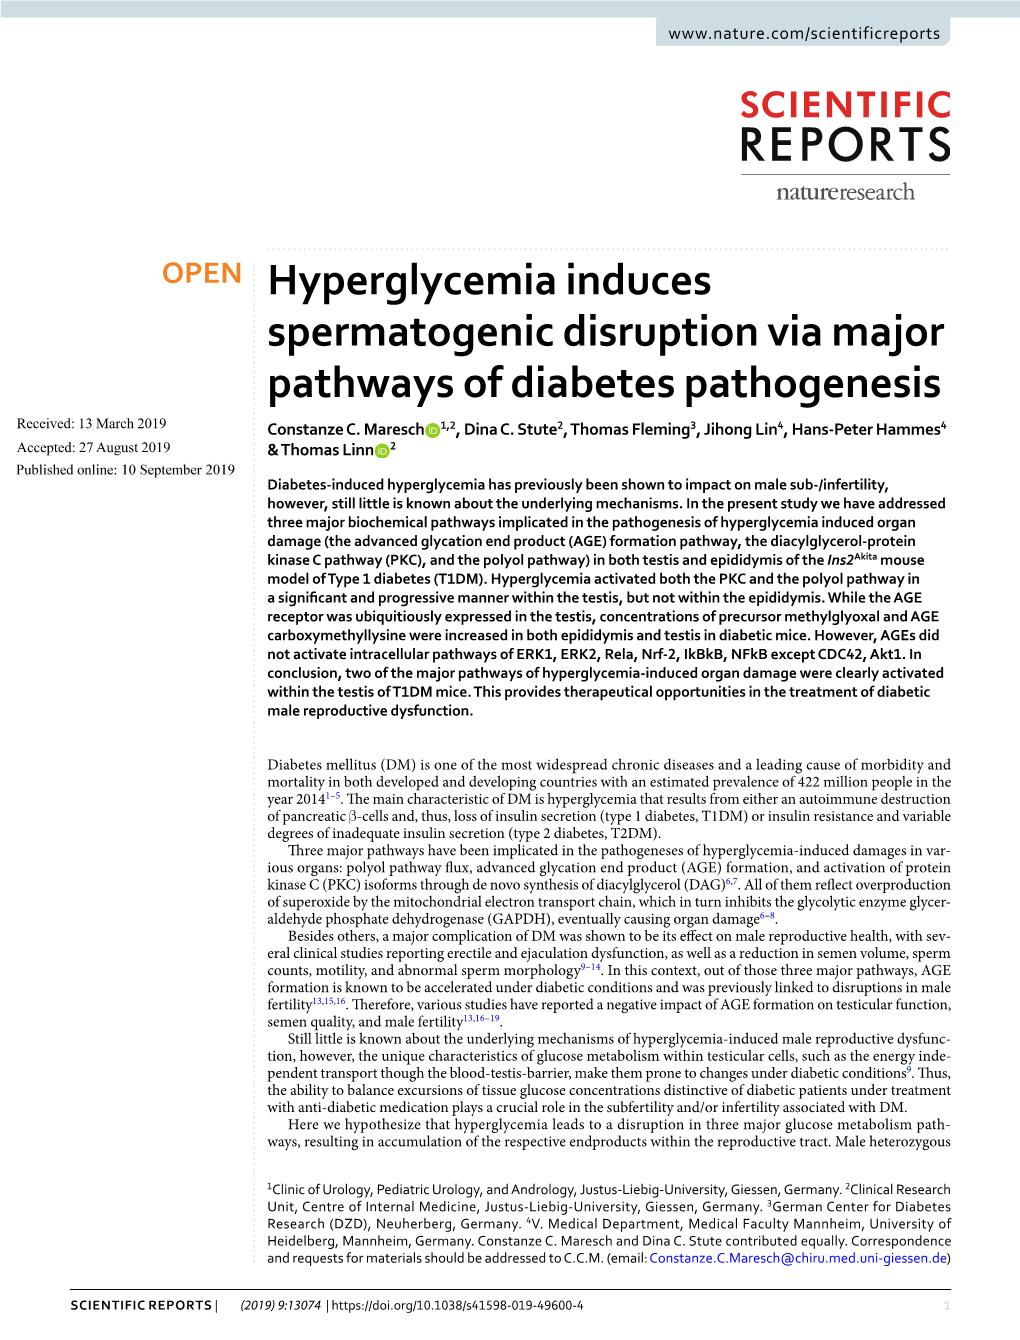 Hyperglycemia Induces Spermatogenic Disruption Via Major Pathways of Diabetes Pathogenesis Received: 13 March 2019 Constanze C